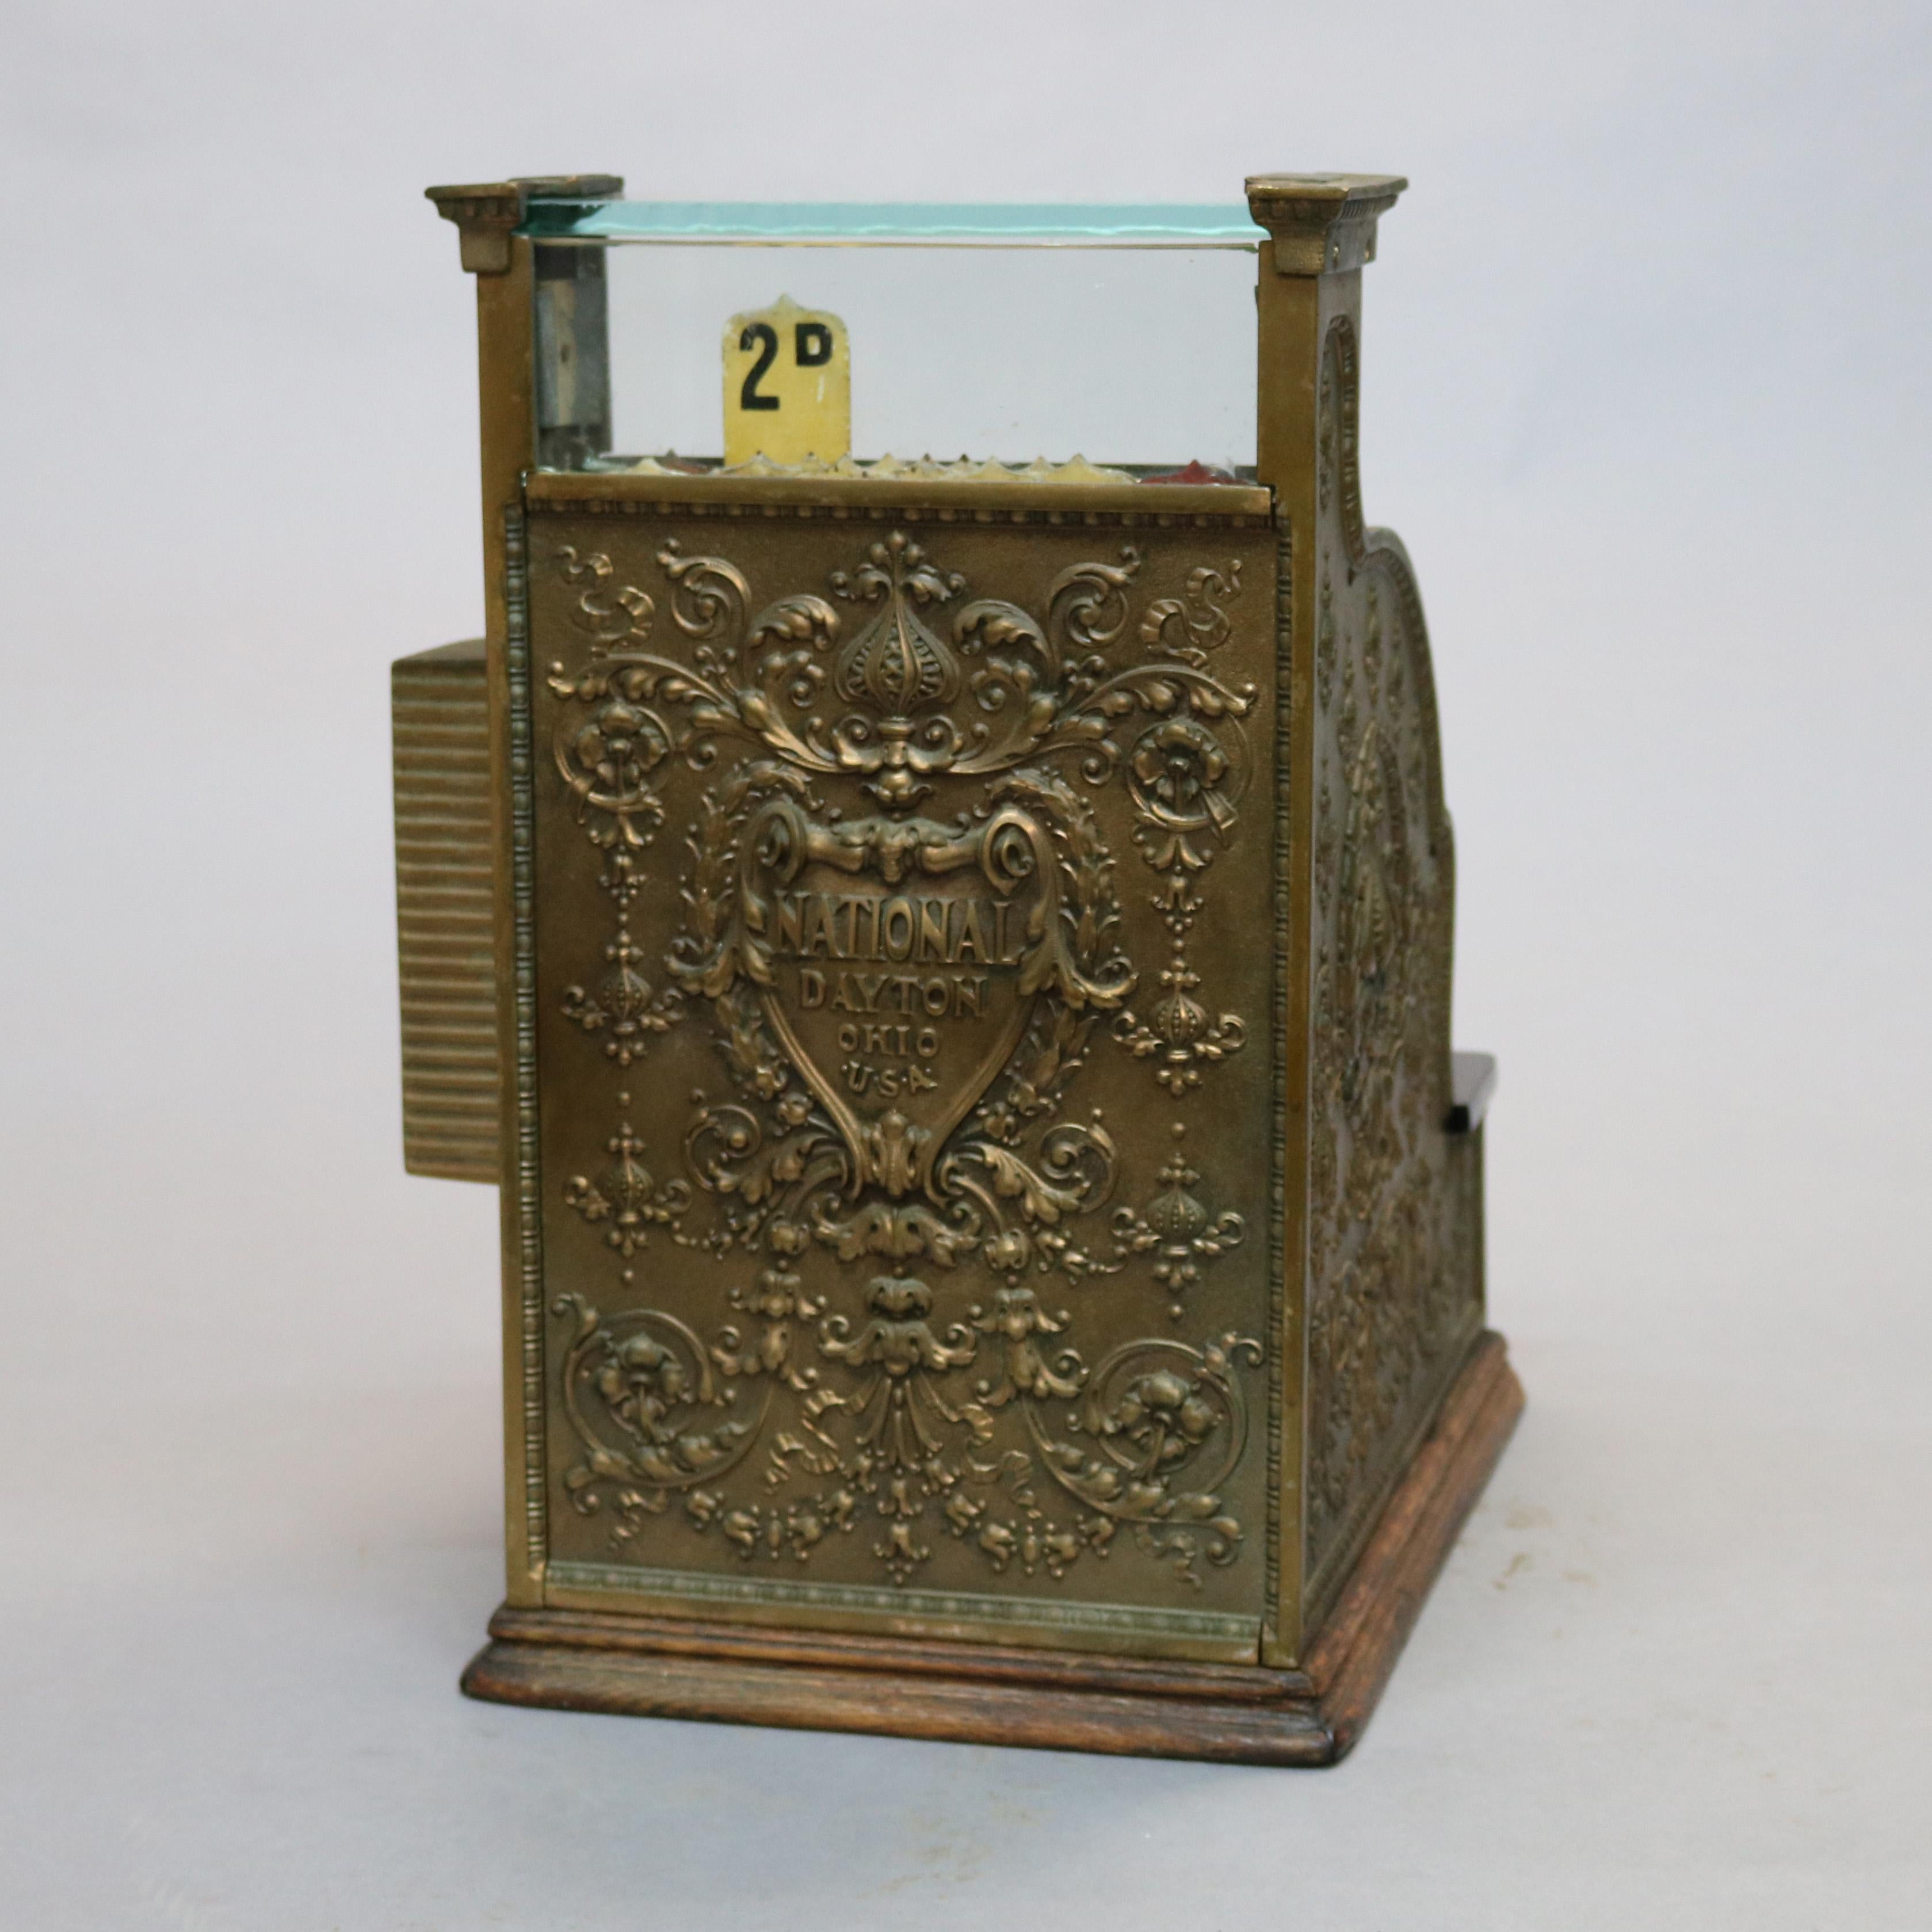 Antique National Candy Store Brass Cash Register, circa 1900 4